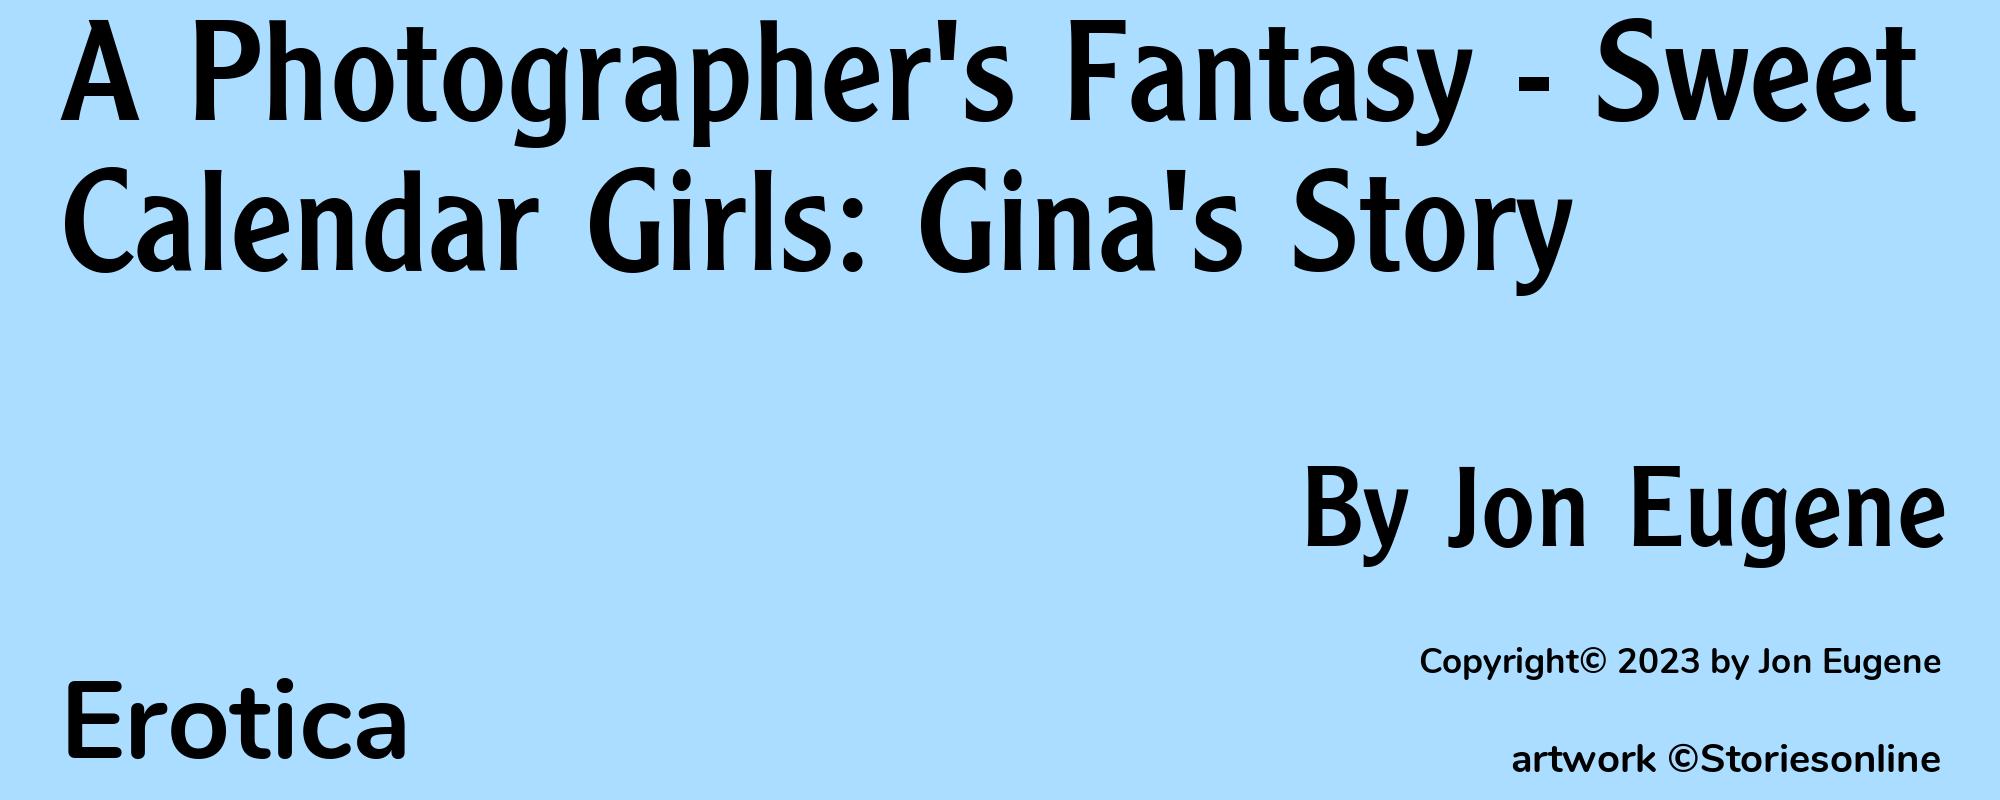 A Photographer's Fantasy - Sweet Calendar Girls: Gina's Story - Cover